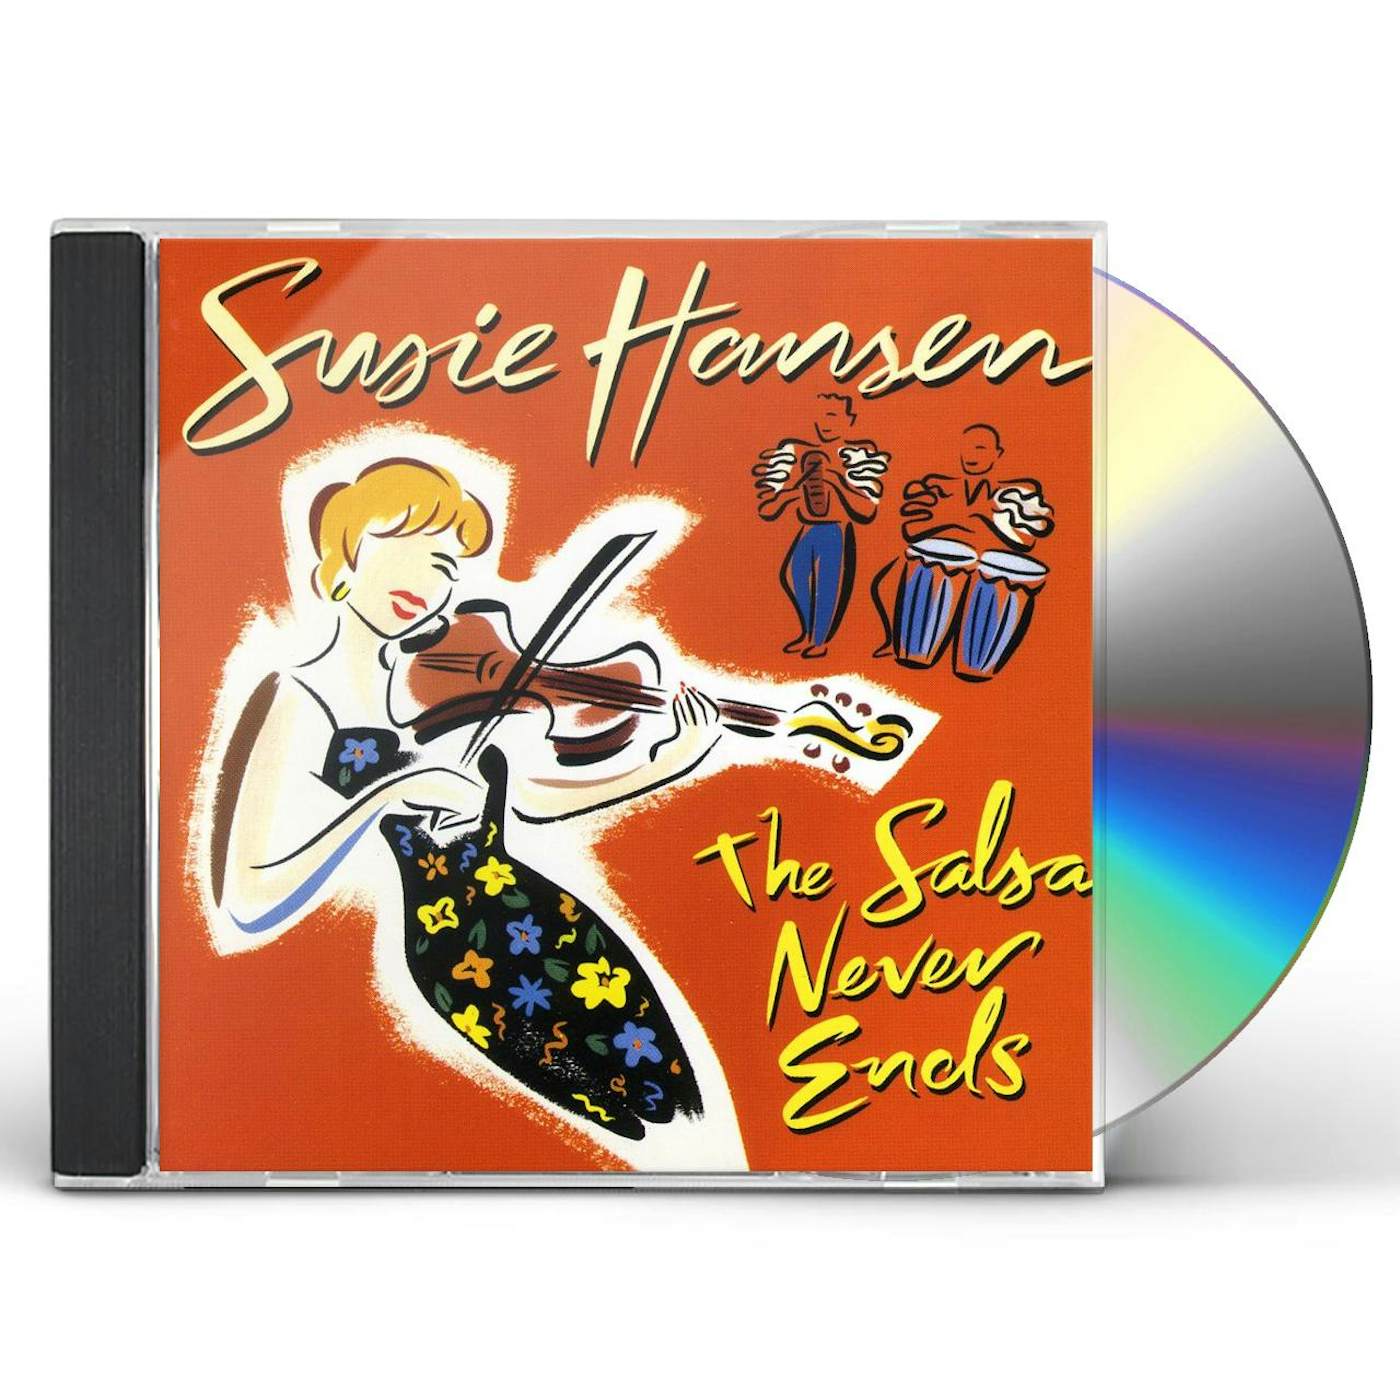 Susie Hansen THE SALSA NEVER ENDS CD